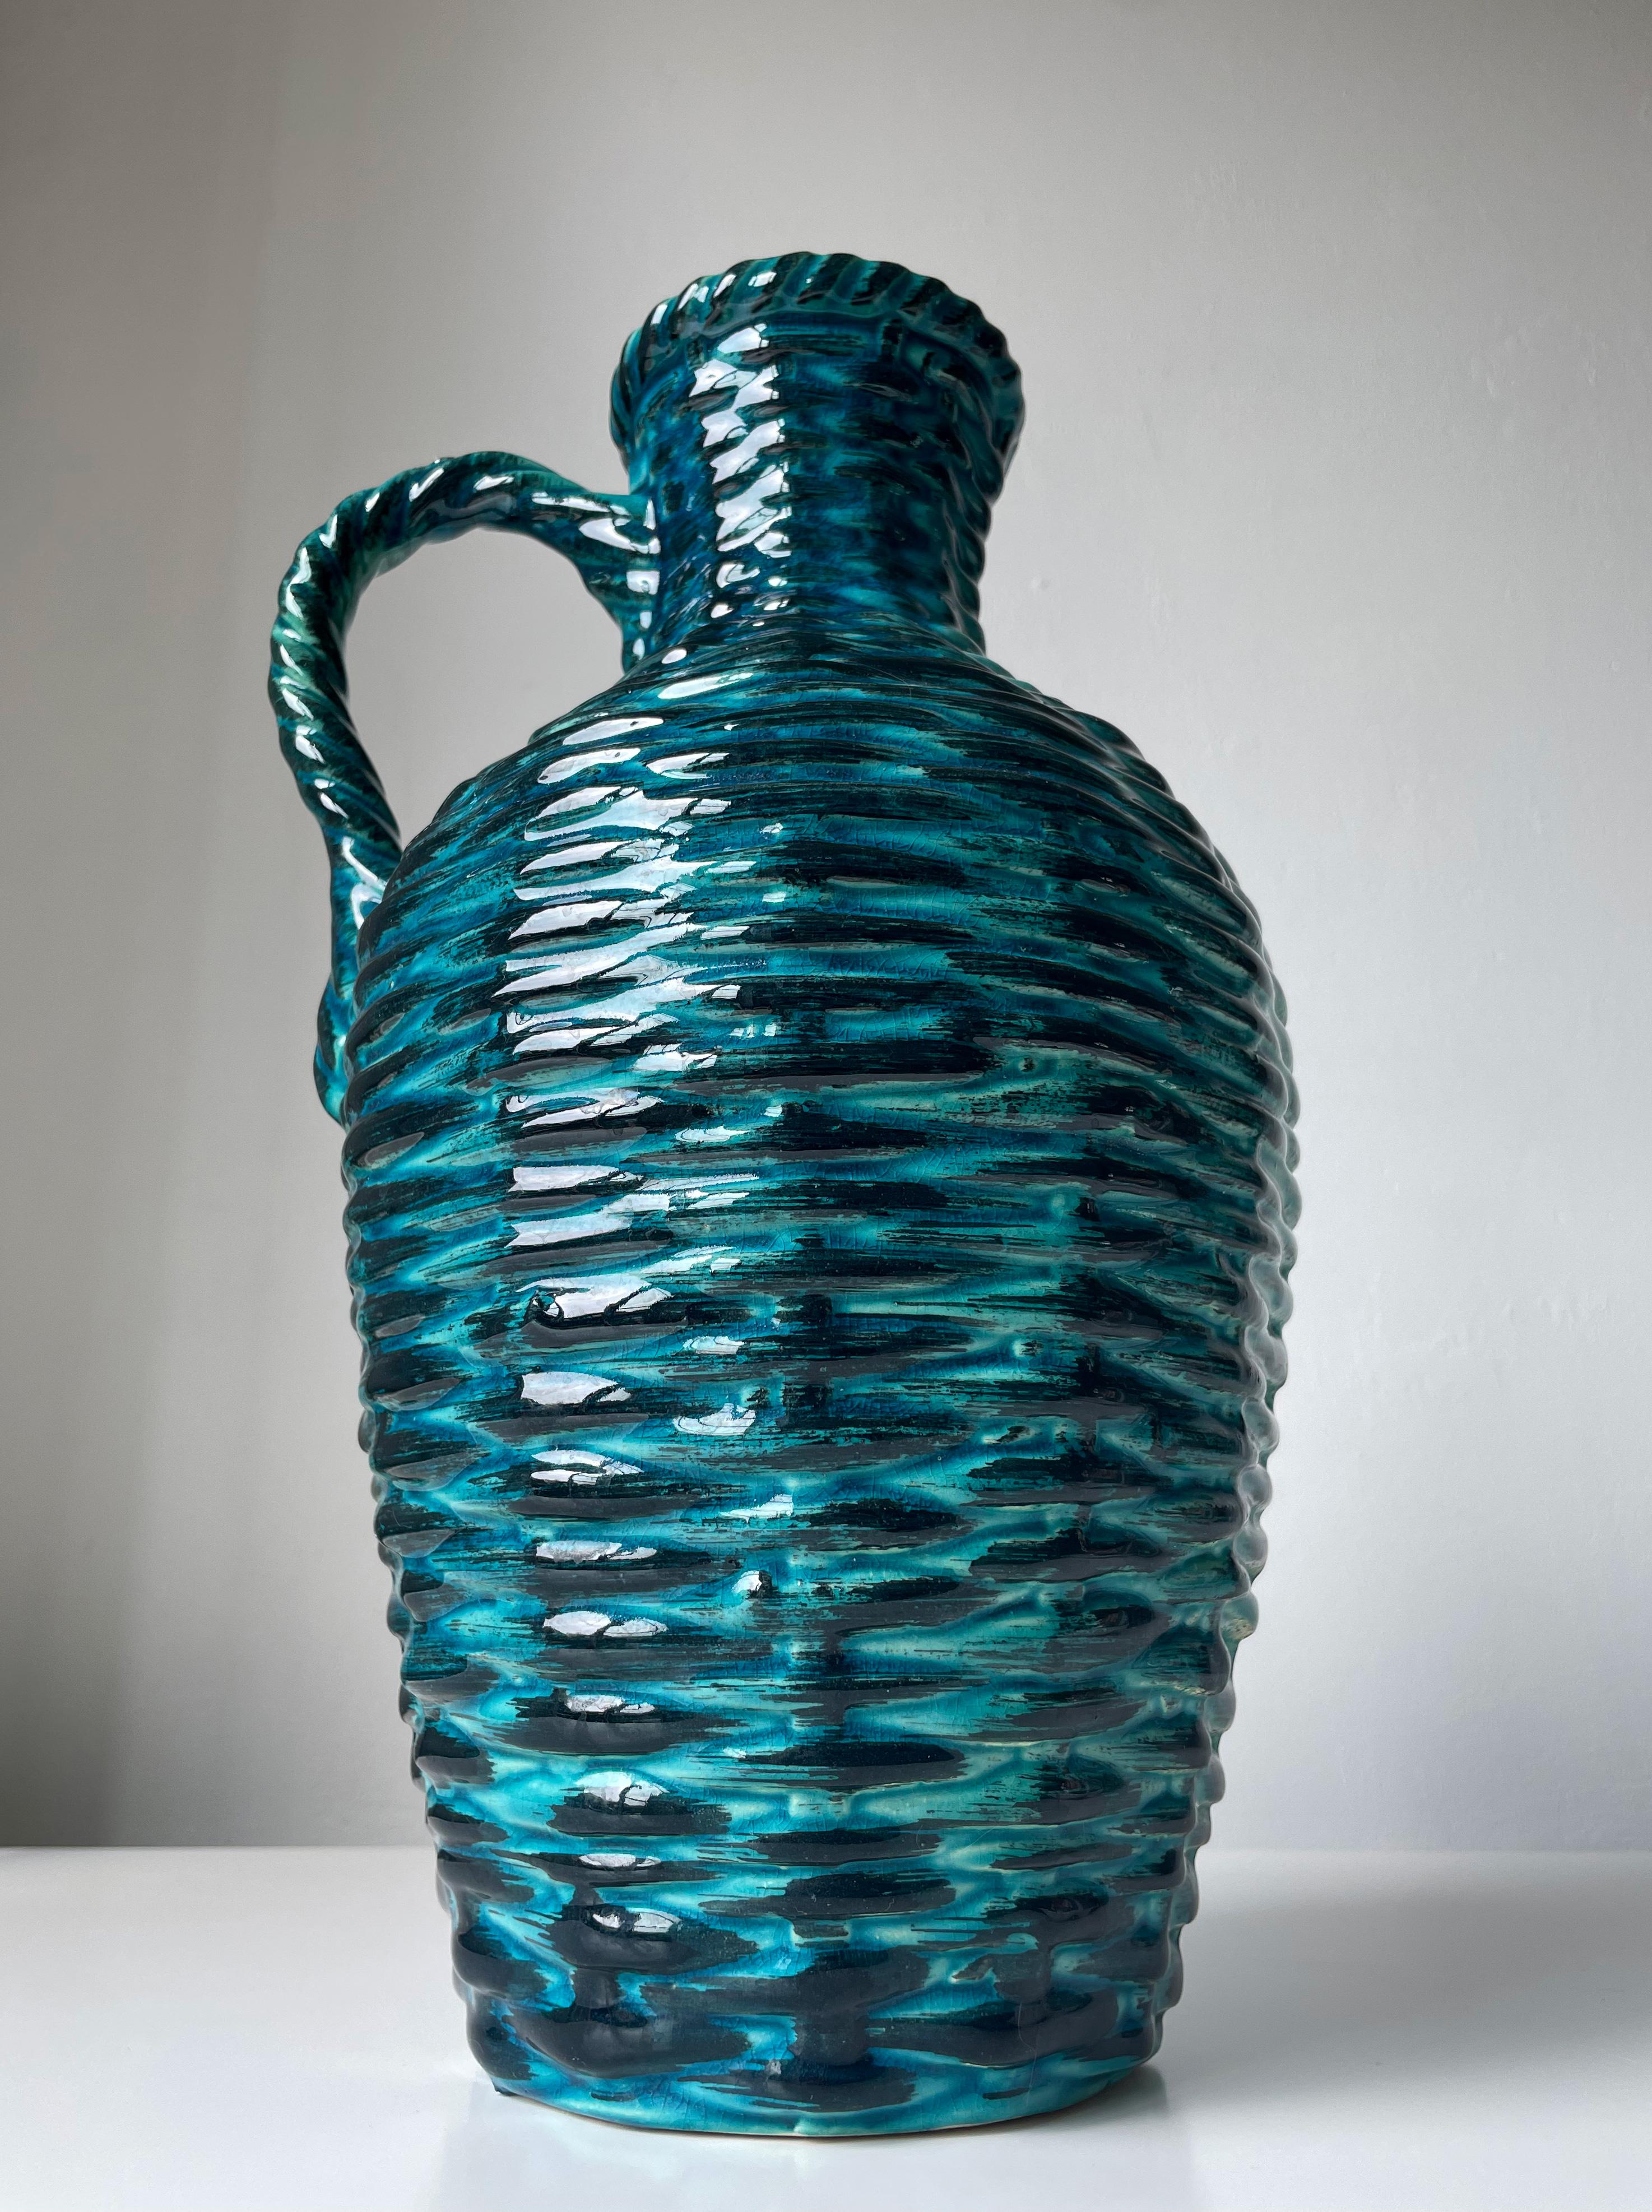 Tall 1970s Petrol, Black Braided Textured Bay Keramik Vase In Good Condition For Sale In Copenhagen, DK